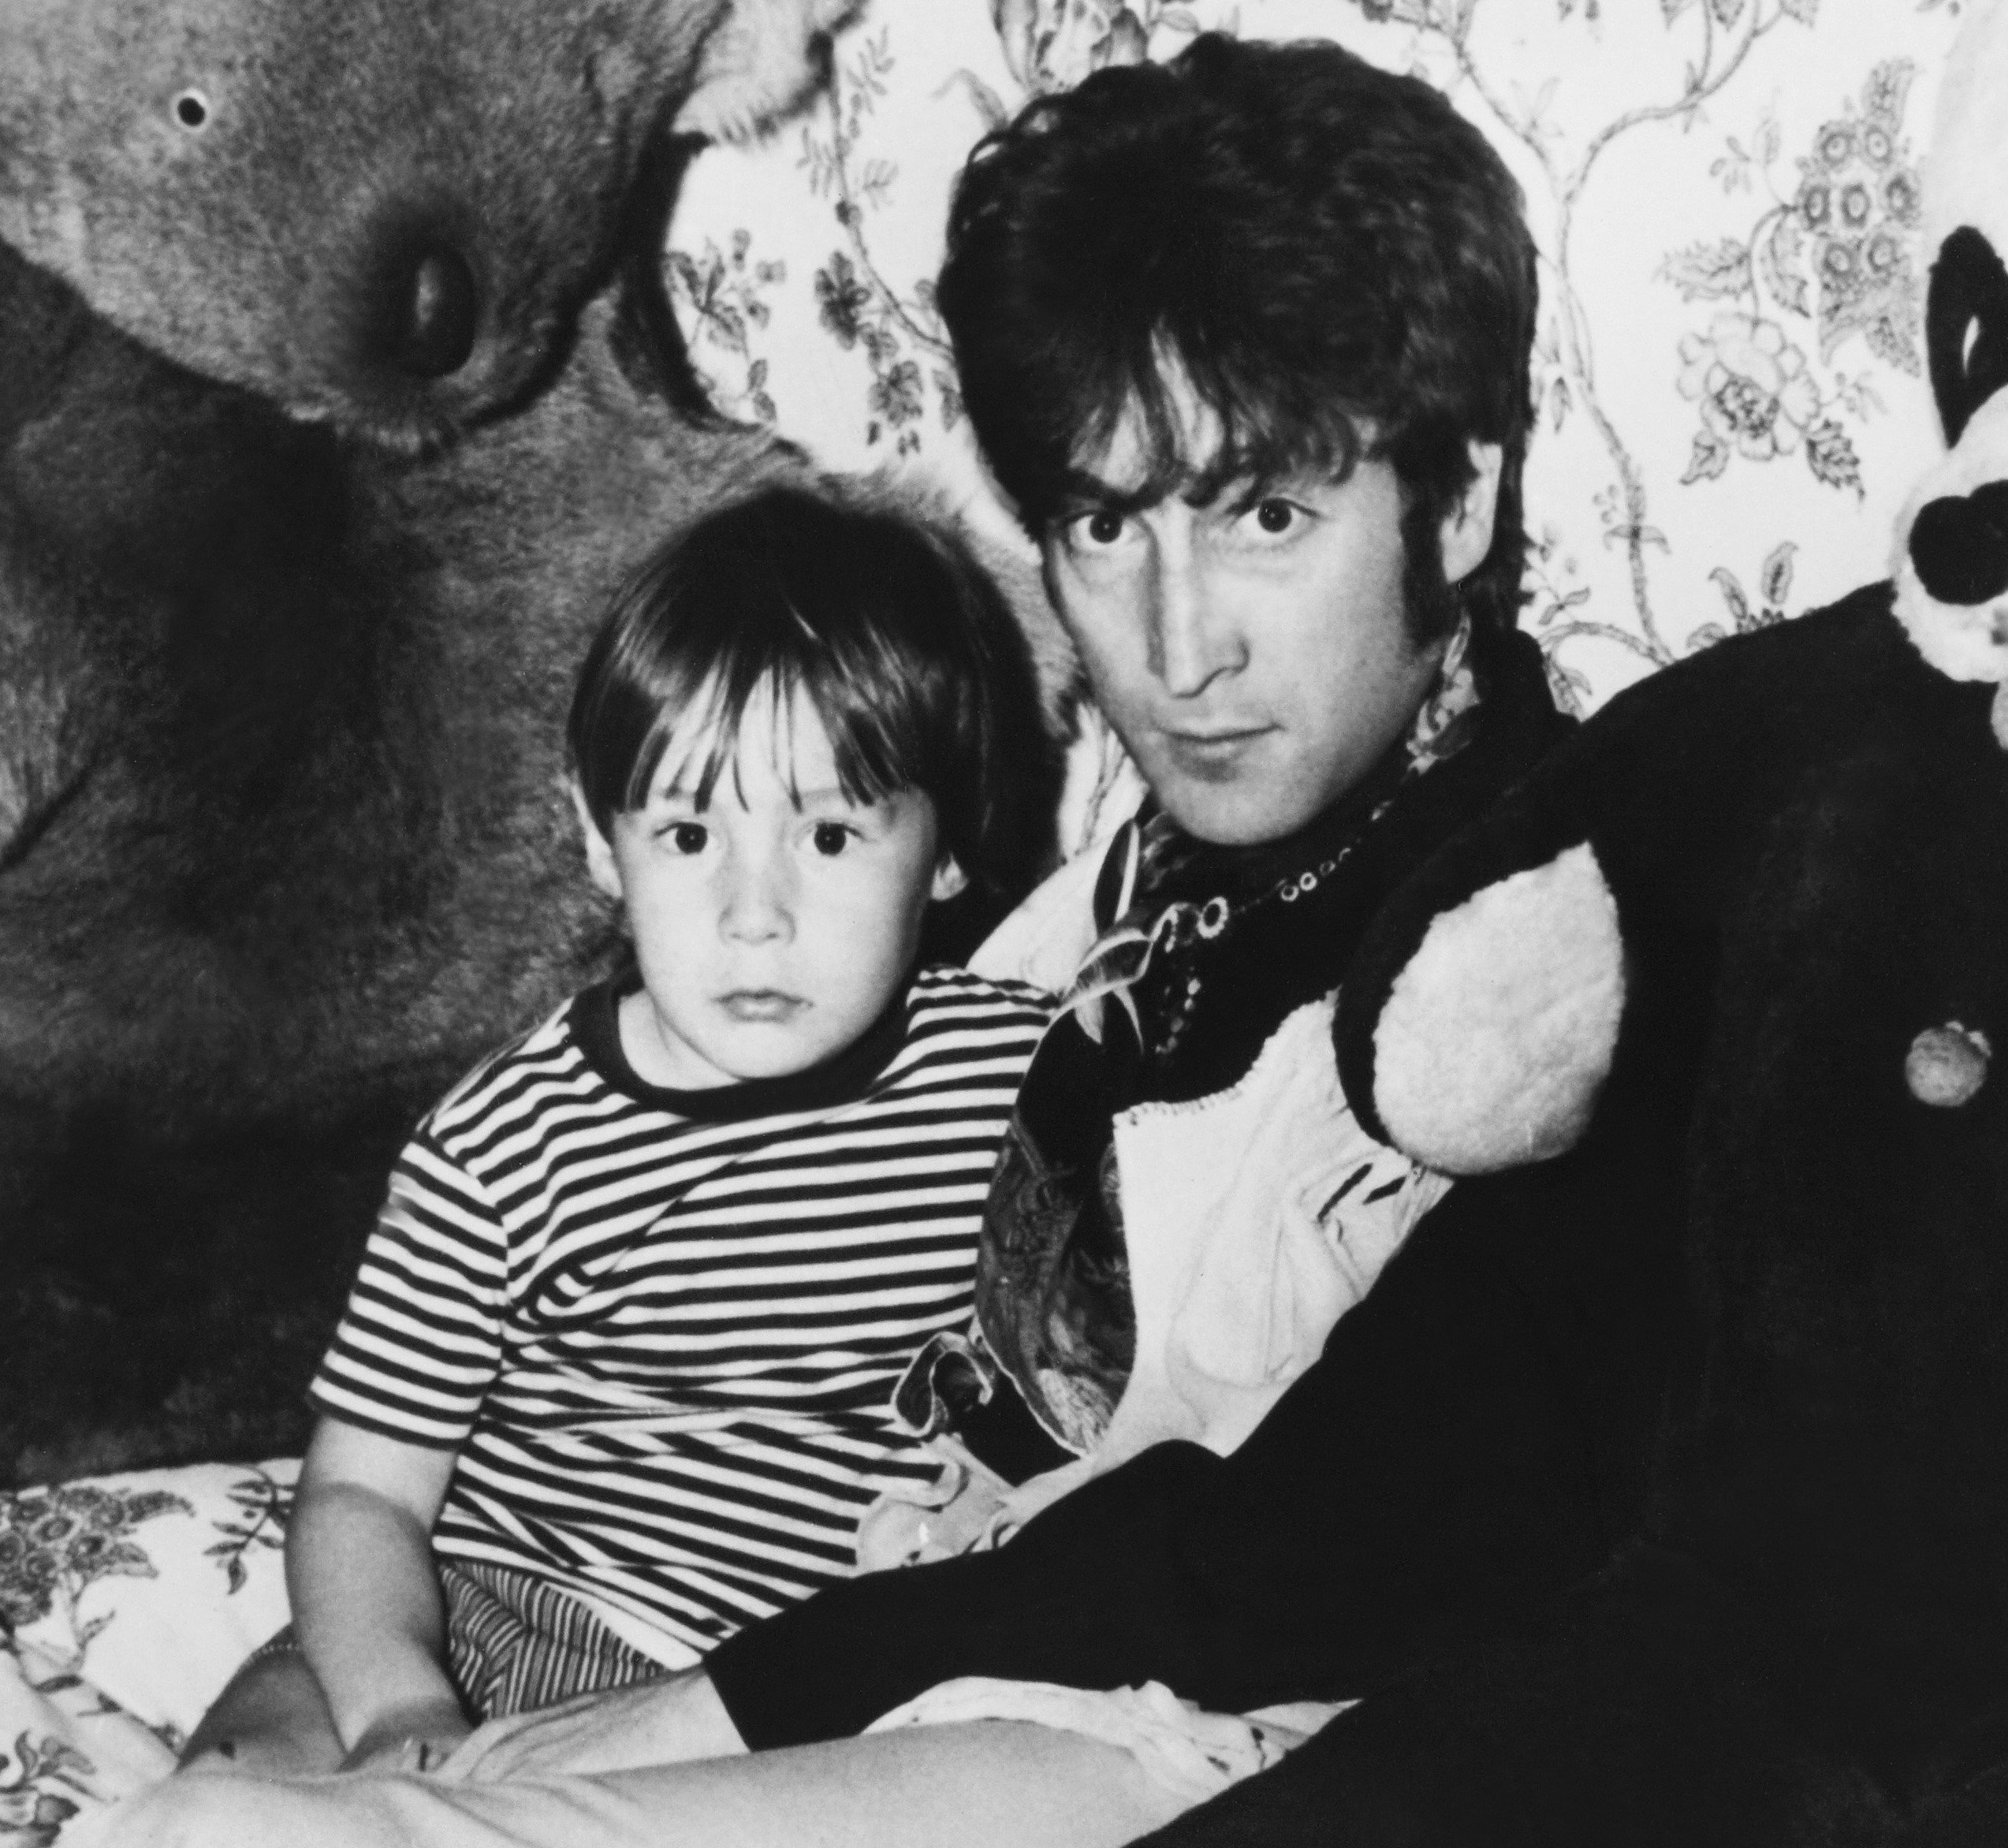 John Lennon and his son, Julian Lennon, near stuffed animals